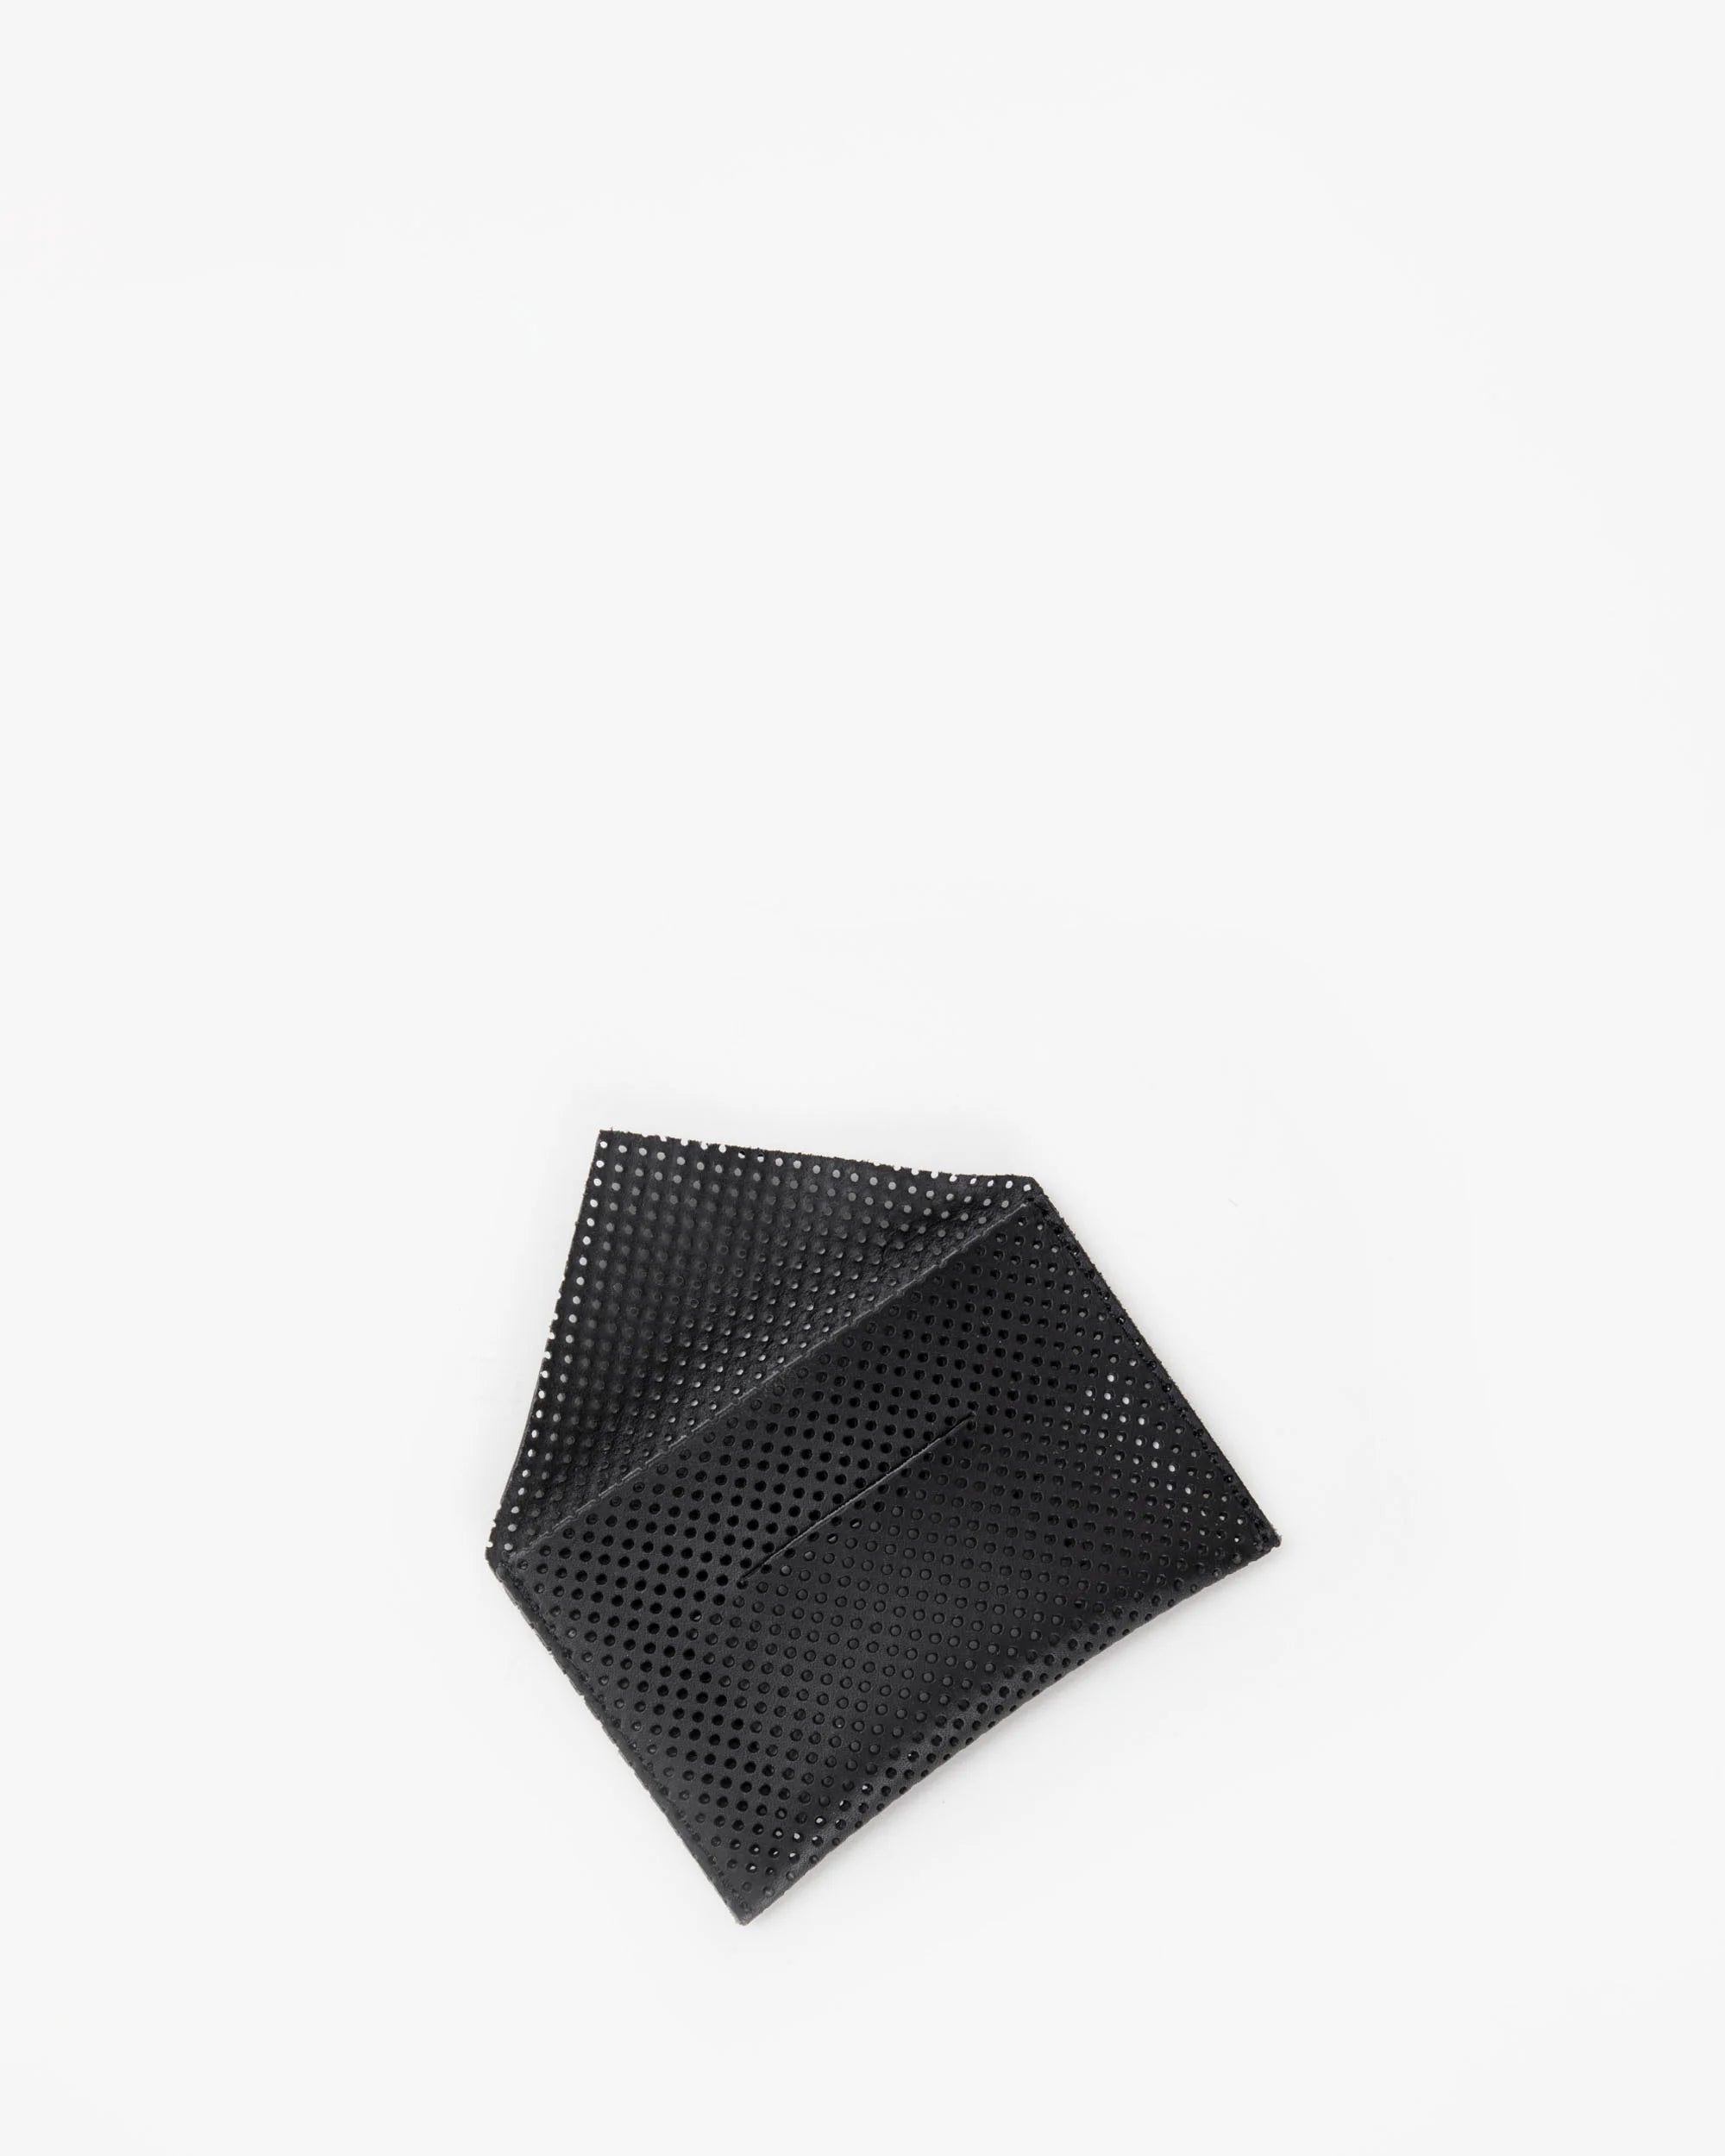 Card Envelope - Black Perforated